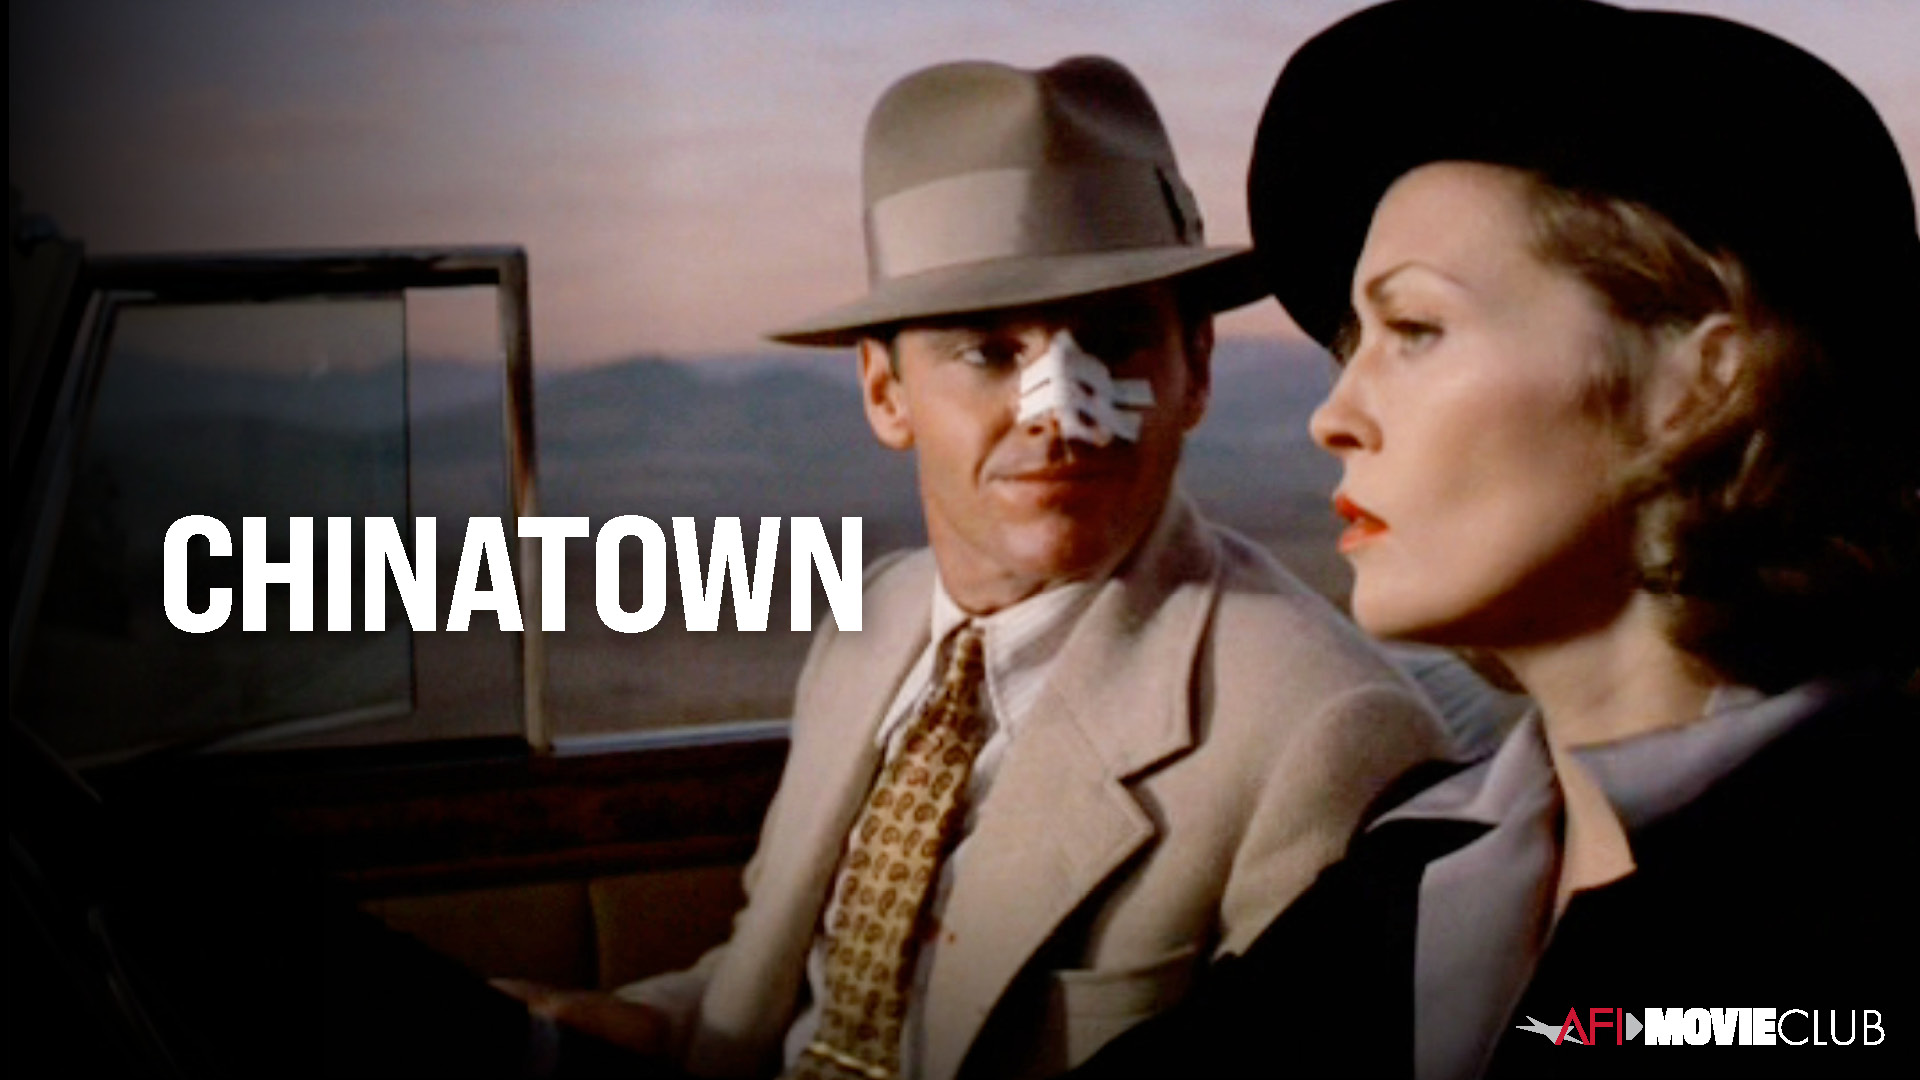 Chinatown Film Still - Jack Nicholson and Faye Dunaway